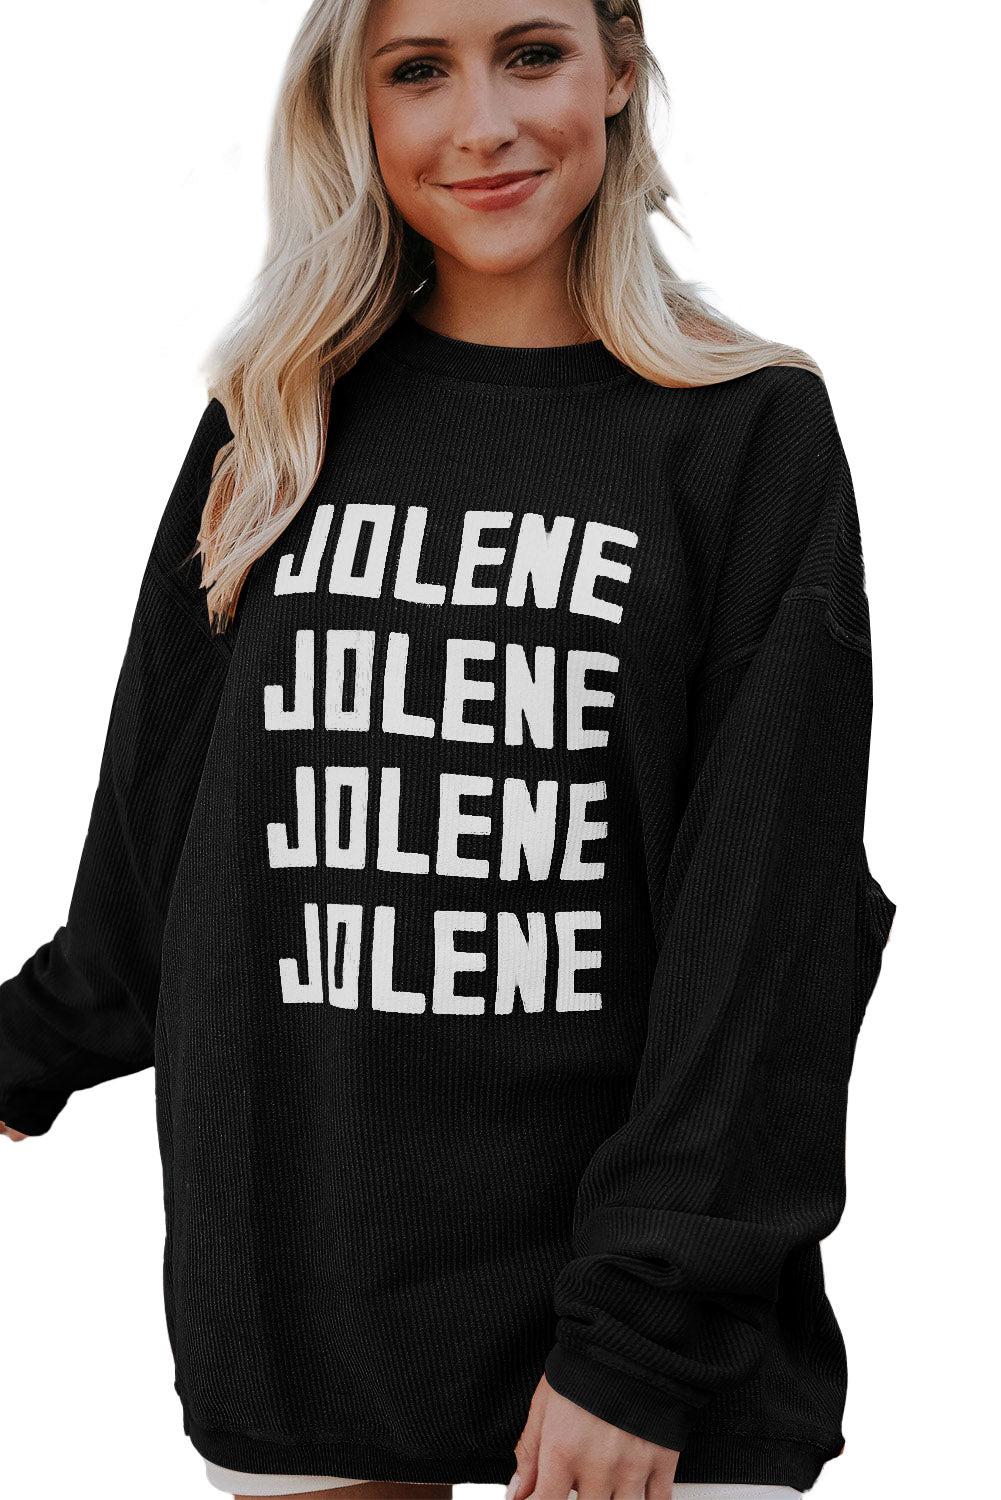 Black JOLENE Ribbed Corded Oversized Sweatshirt